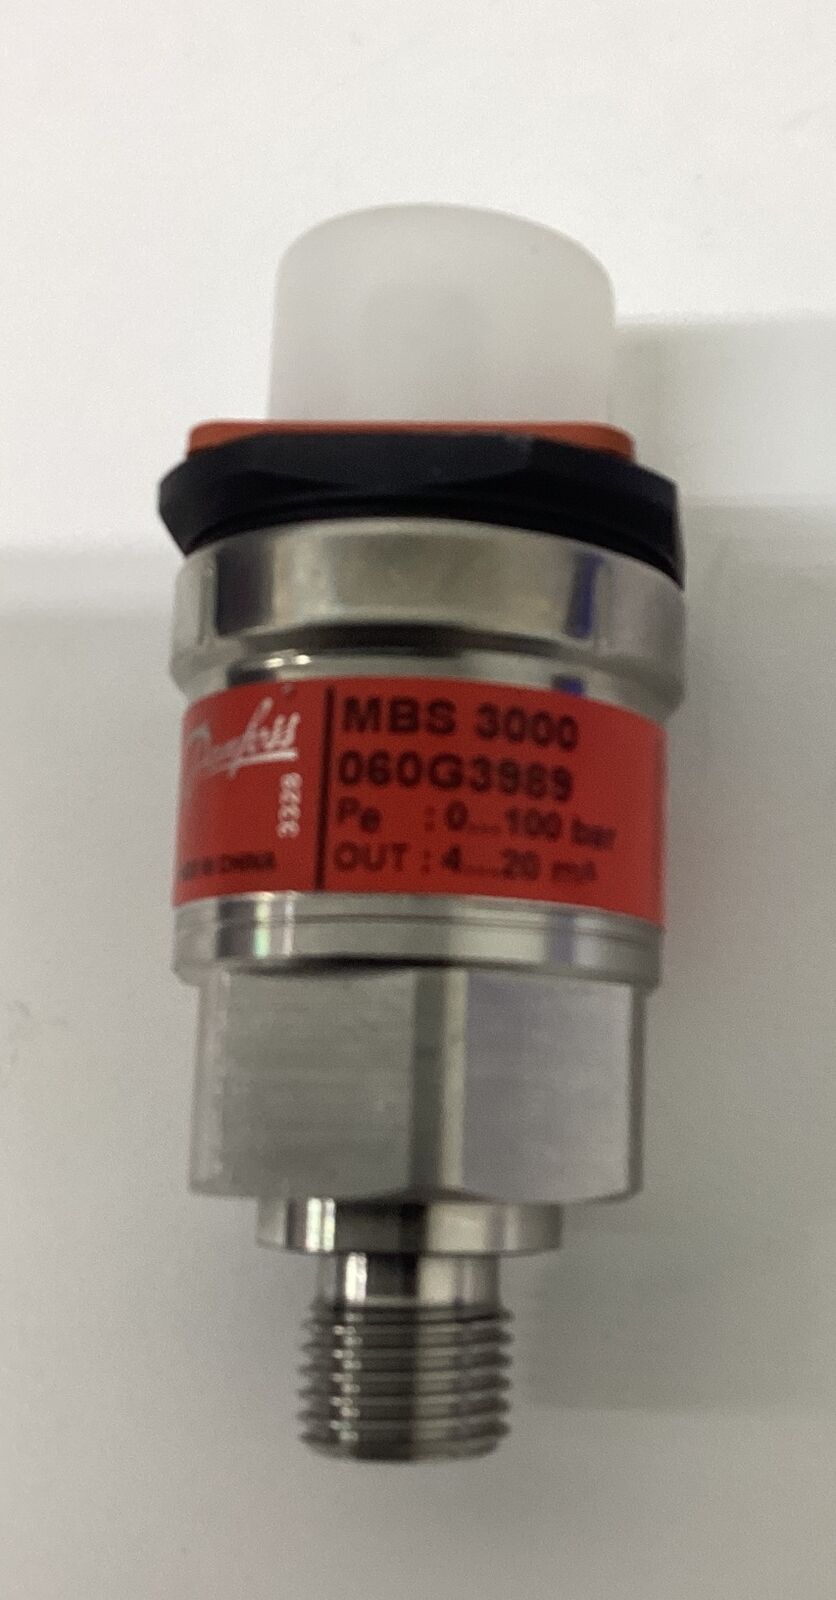 Eaton Danfuss MBS-3000-060G3989 Pressure Transmitter 0-100 Bar (GR140)